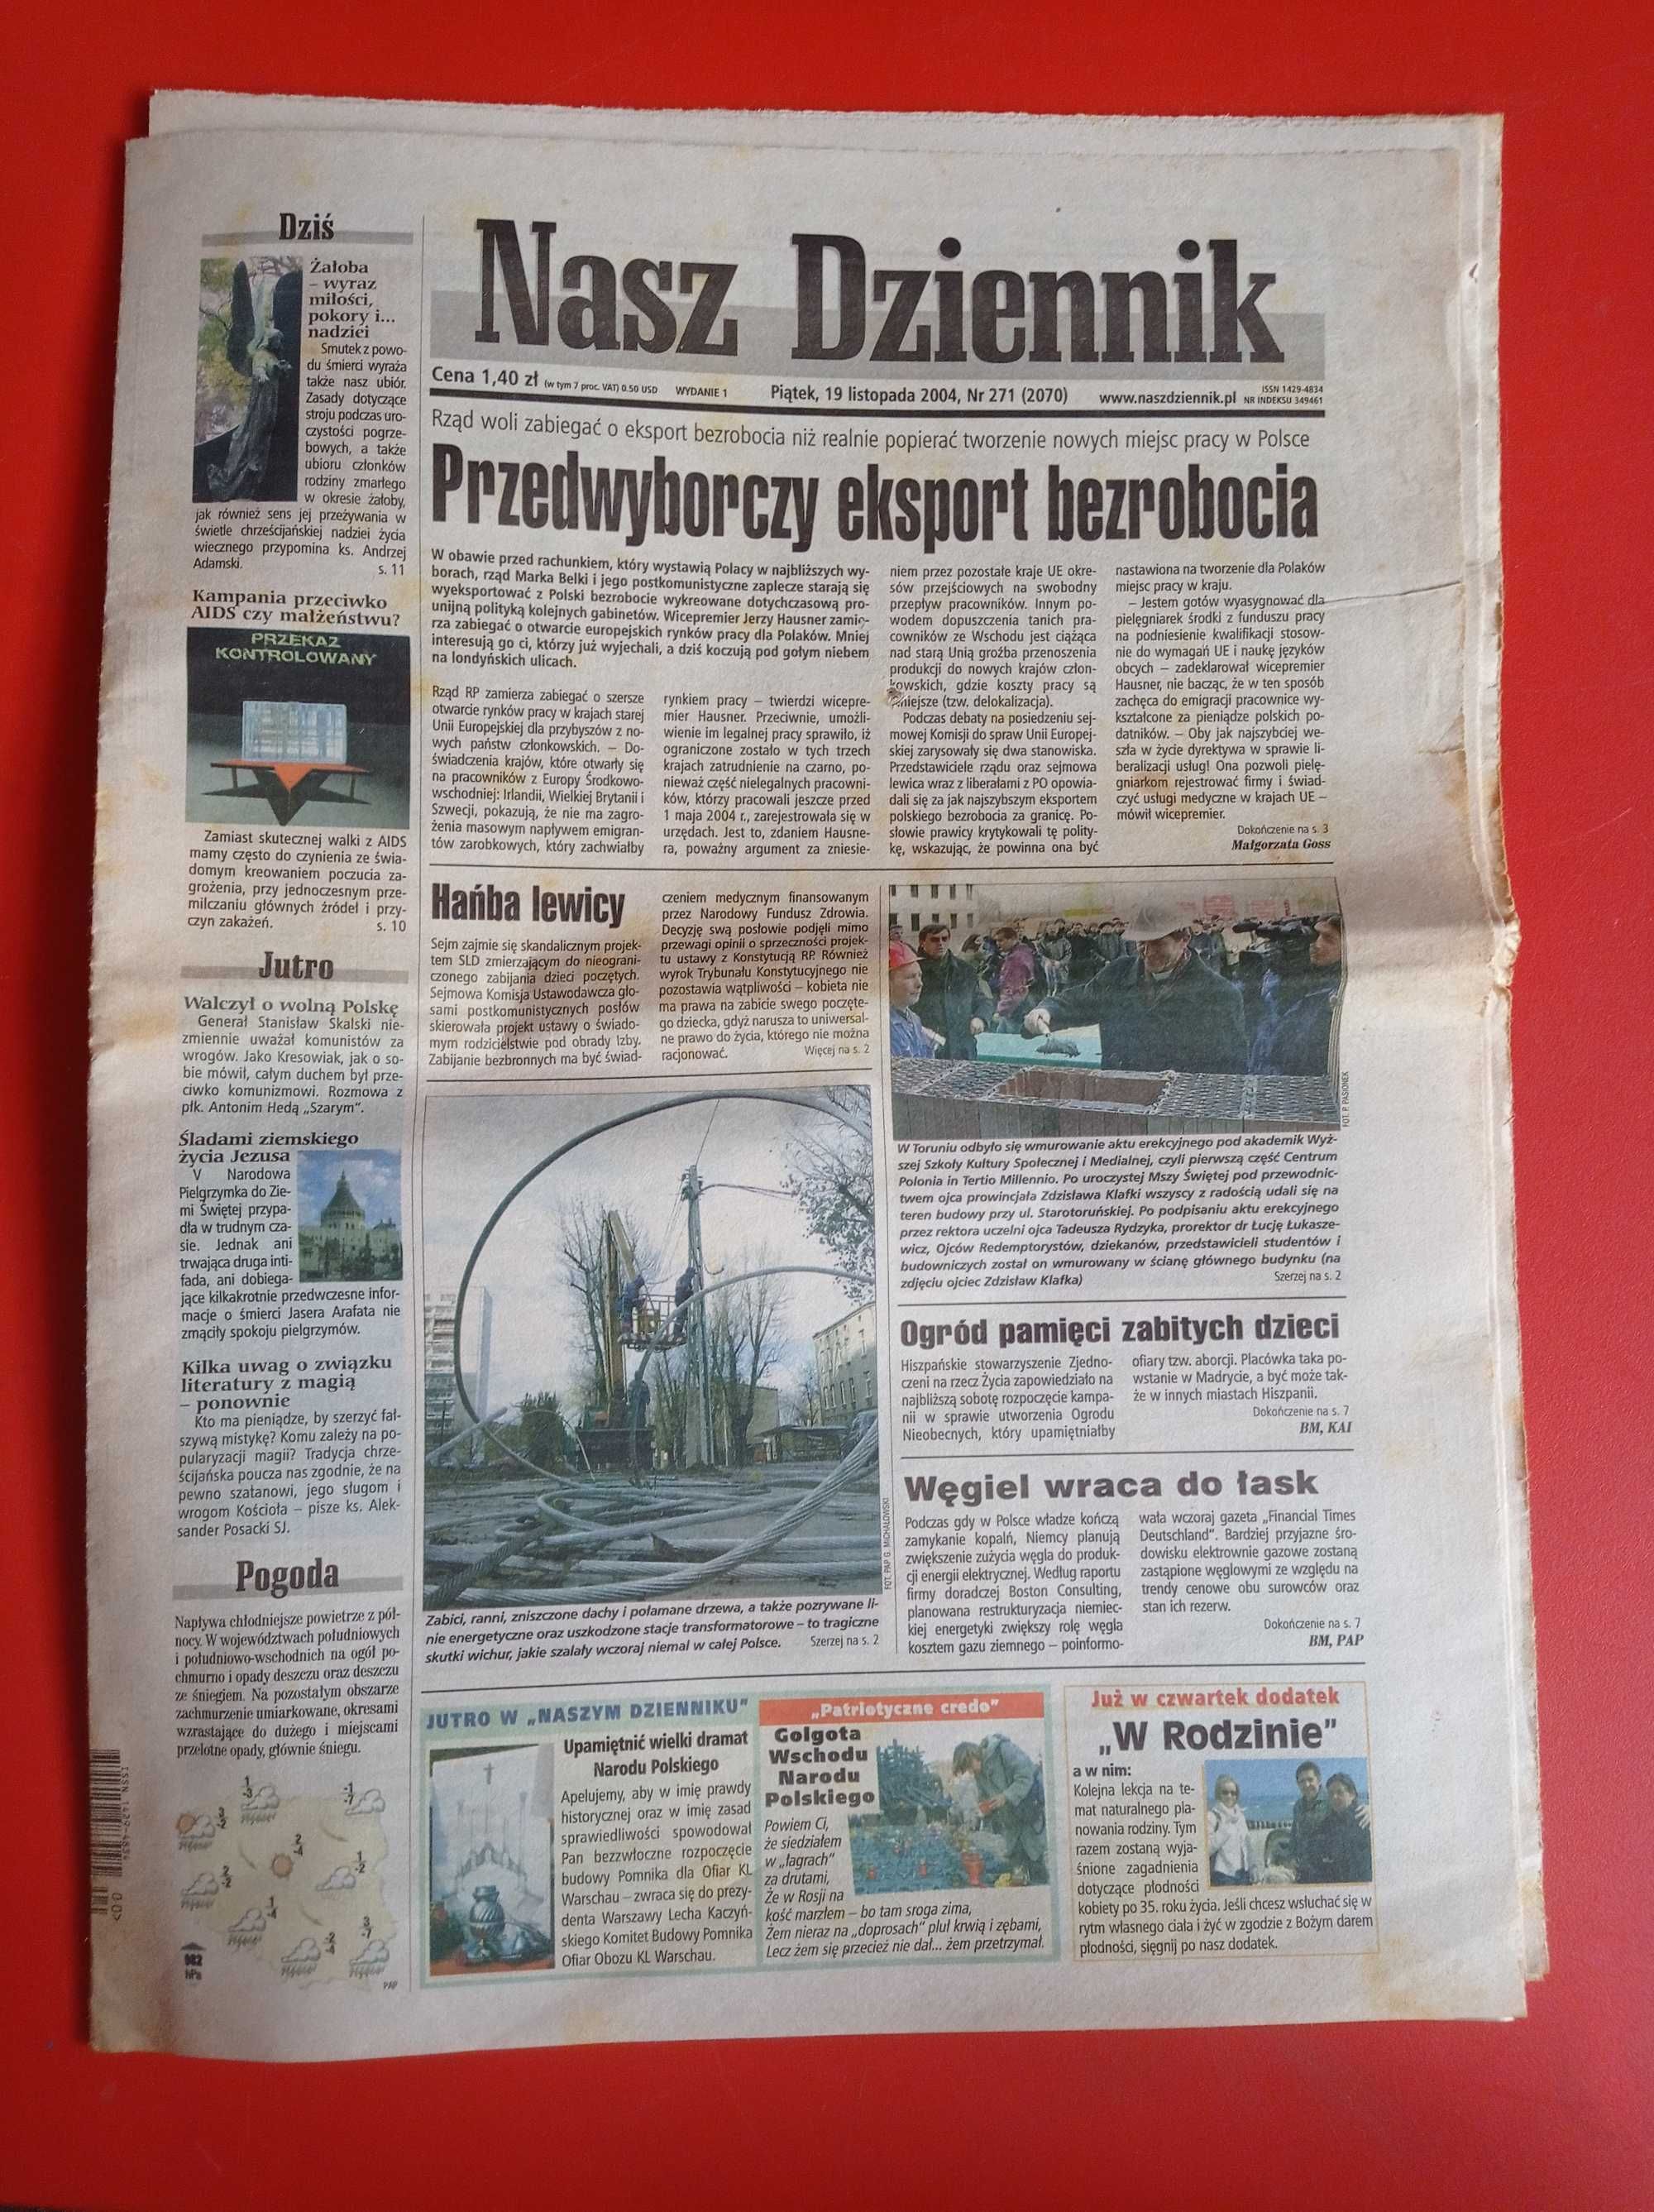 Nasz Dziennik, nr 271/2004, 19 listopada 2004